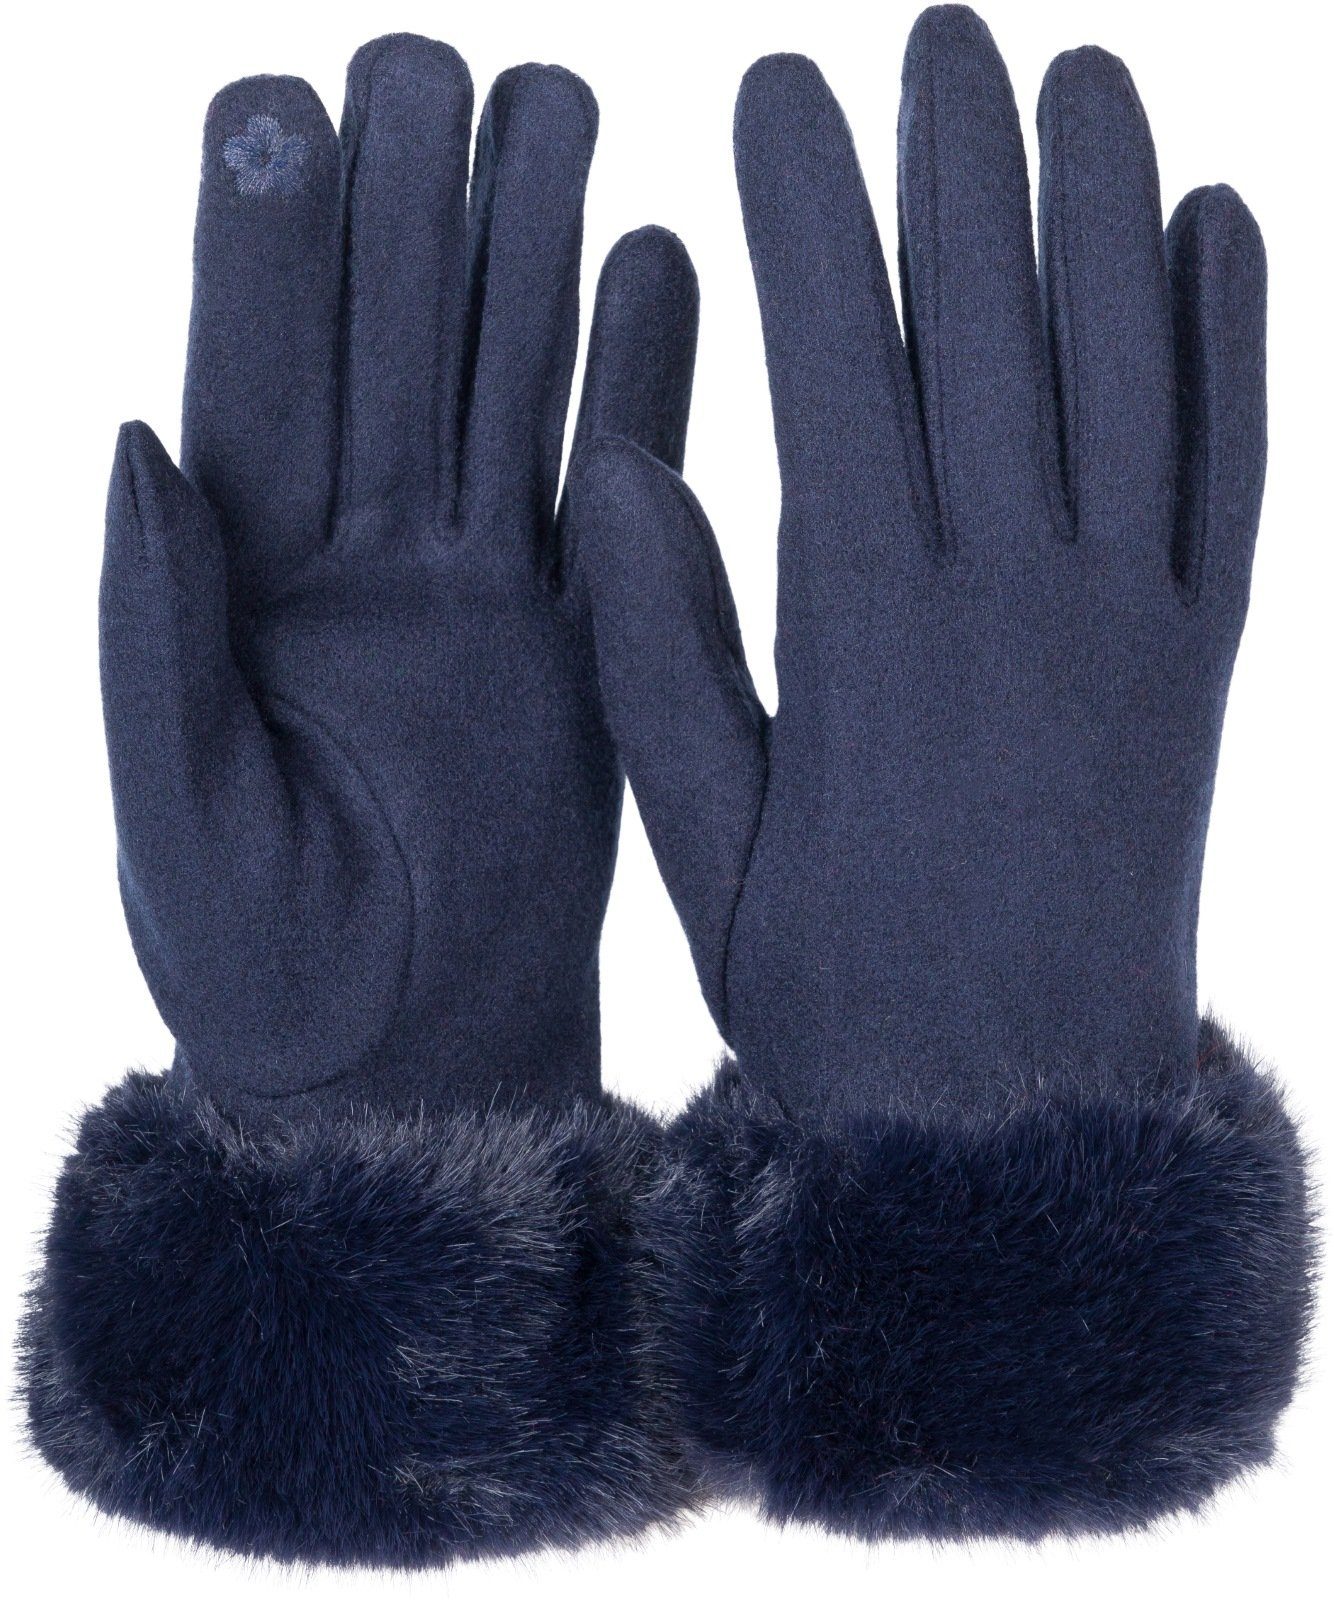 styleBREAKER Fleecehandschuhe Unifarbene Handschuhe Touchscreen mit Kunstfell Dunkelblau